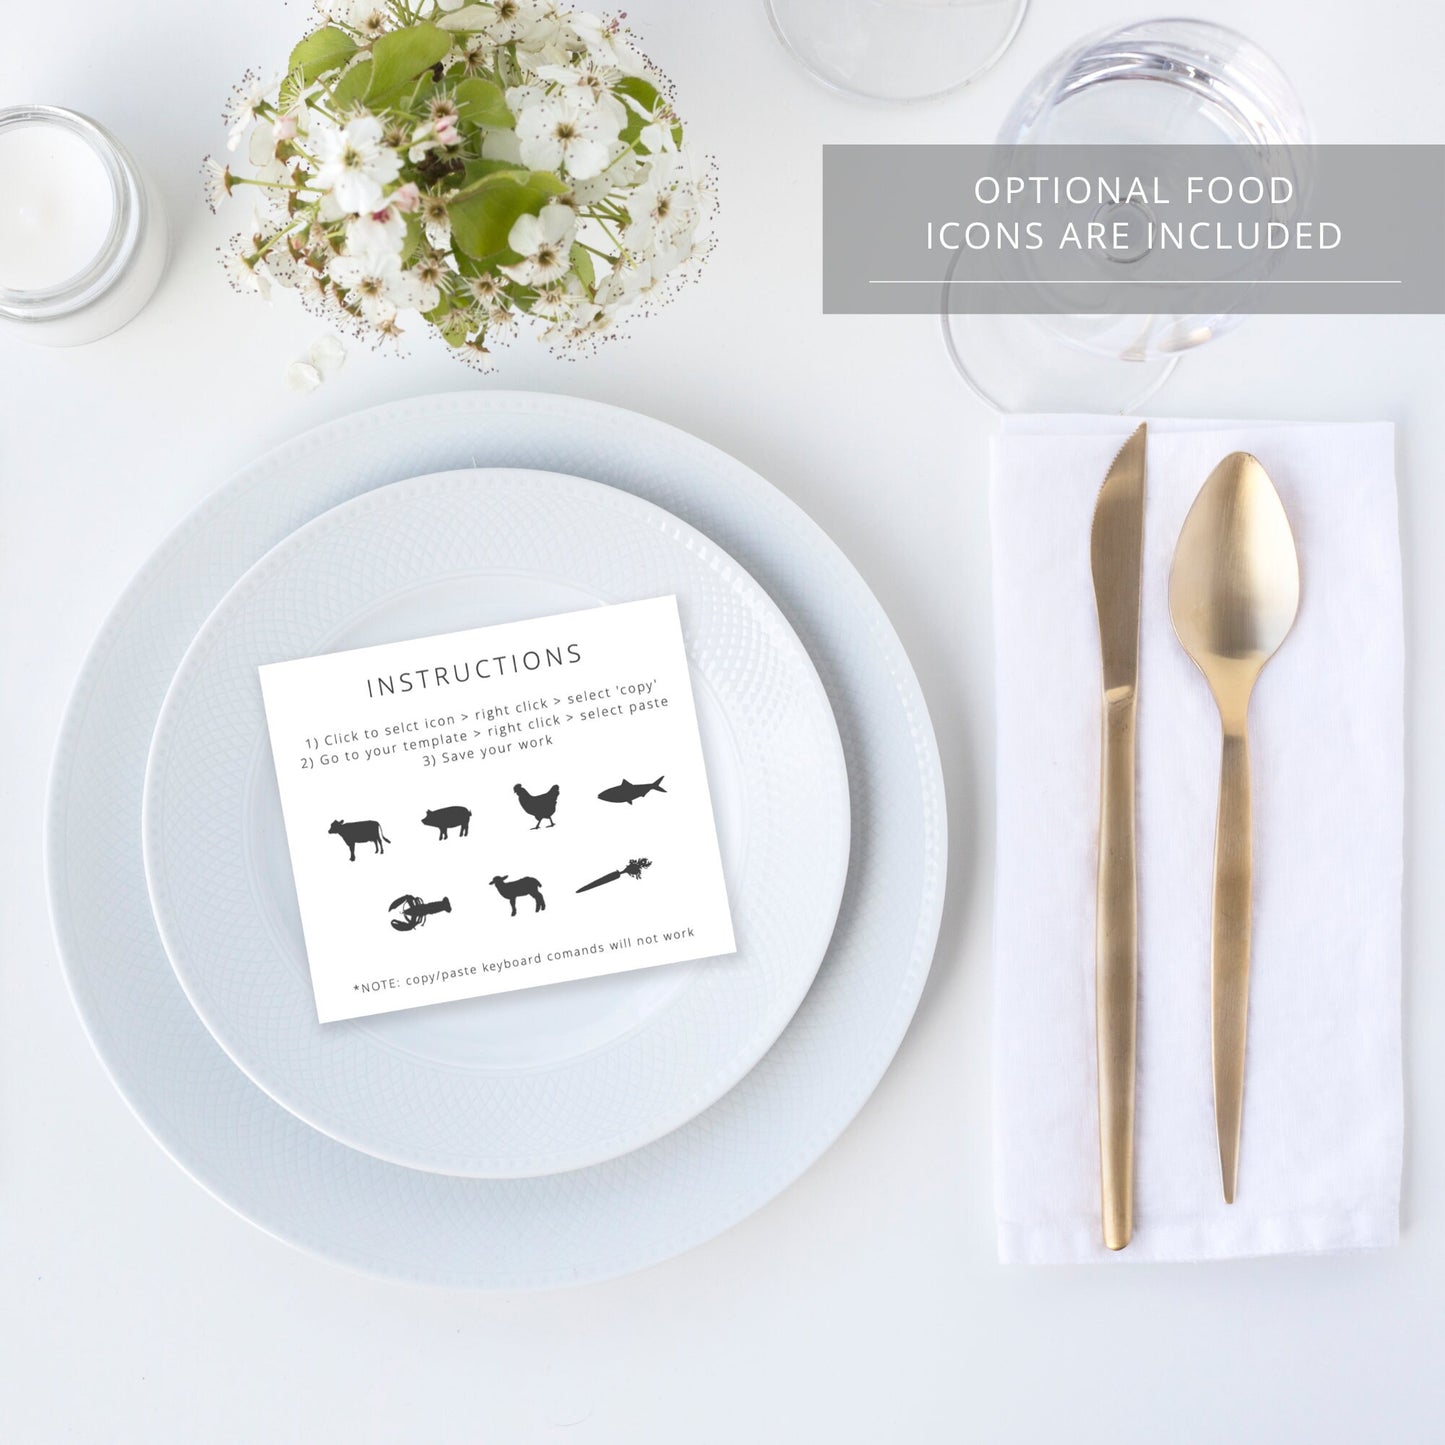 Editable Modern Script Wedding Place Card Wedding Name Card Escort Card Template